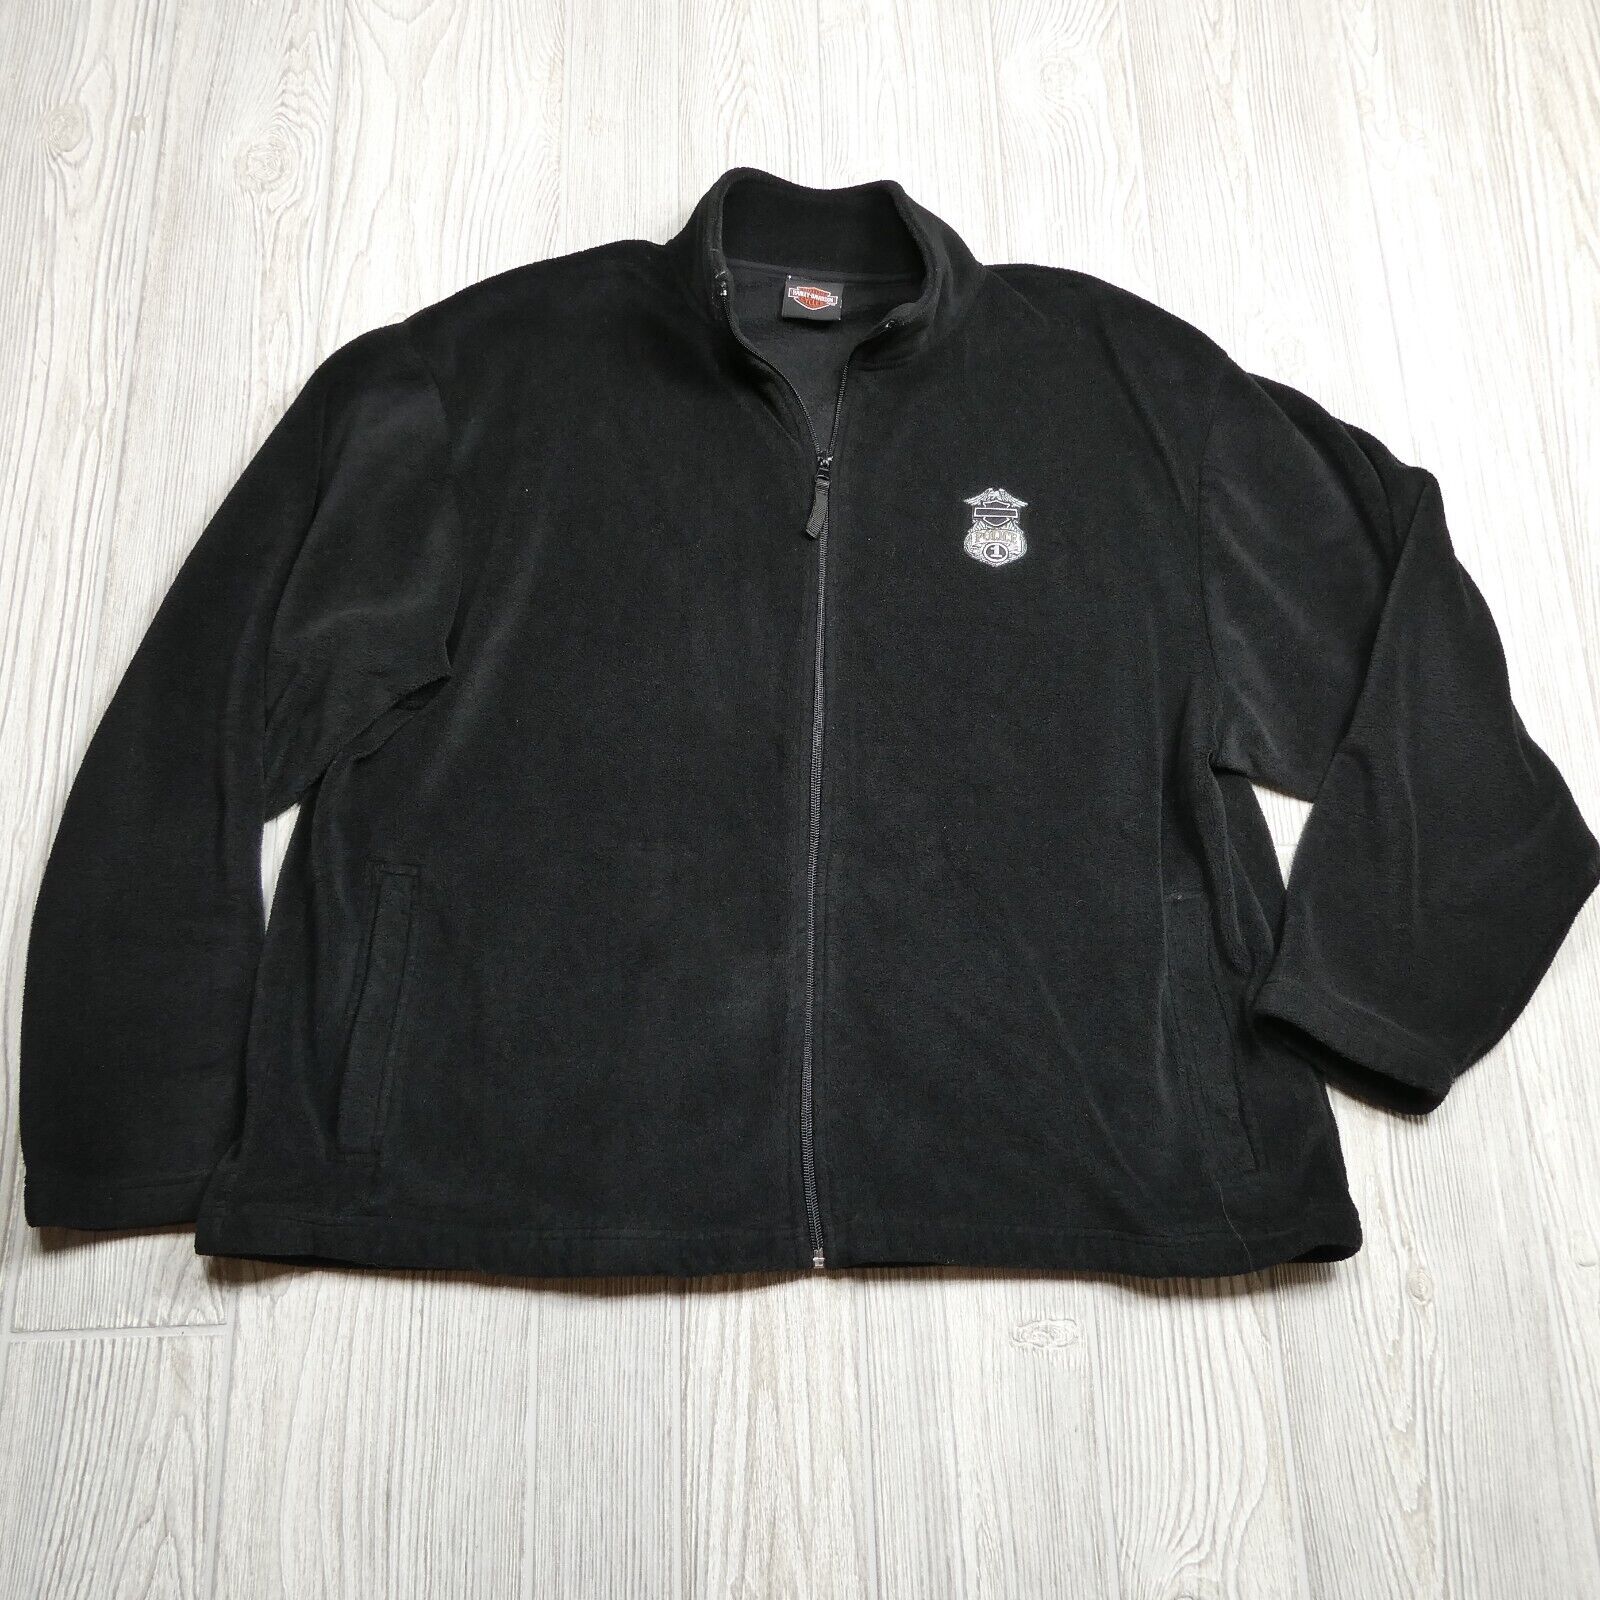 Harley Davidson Fleece Jacket Adult Medium Black Full Zip Embroidered Police